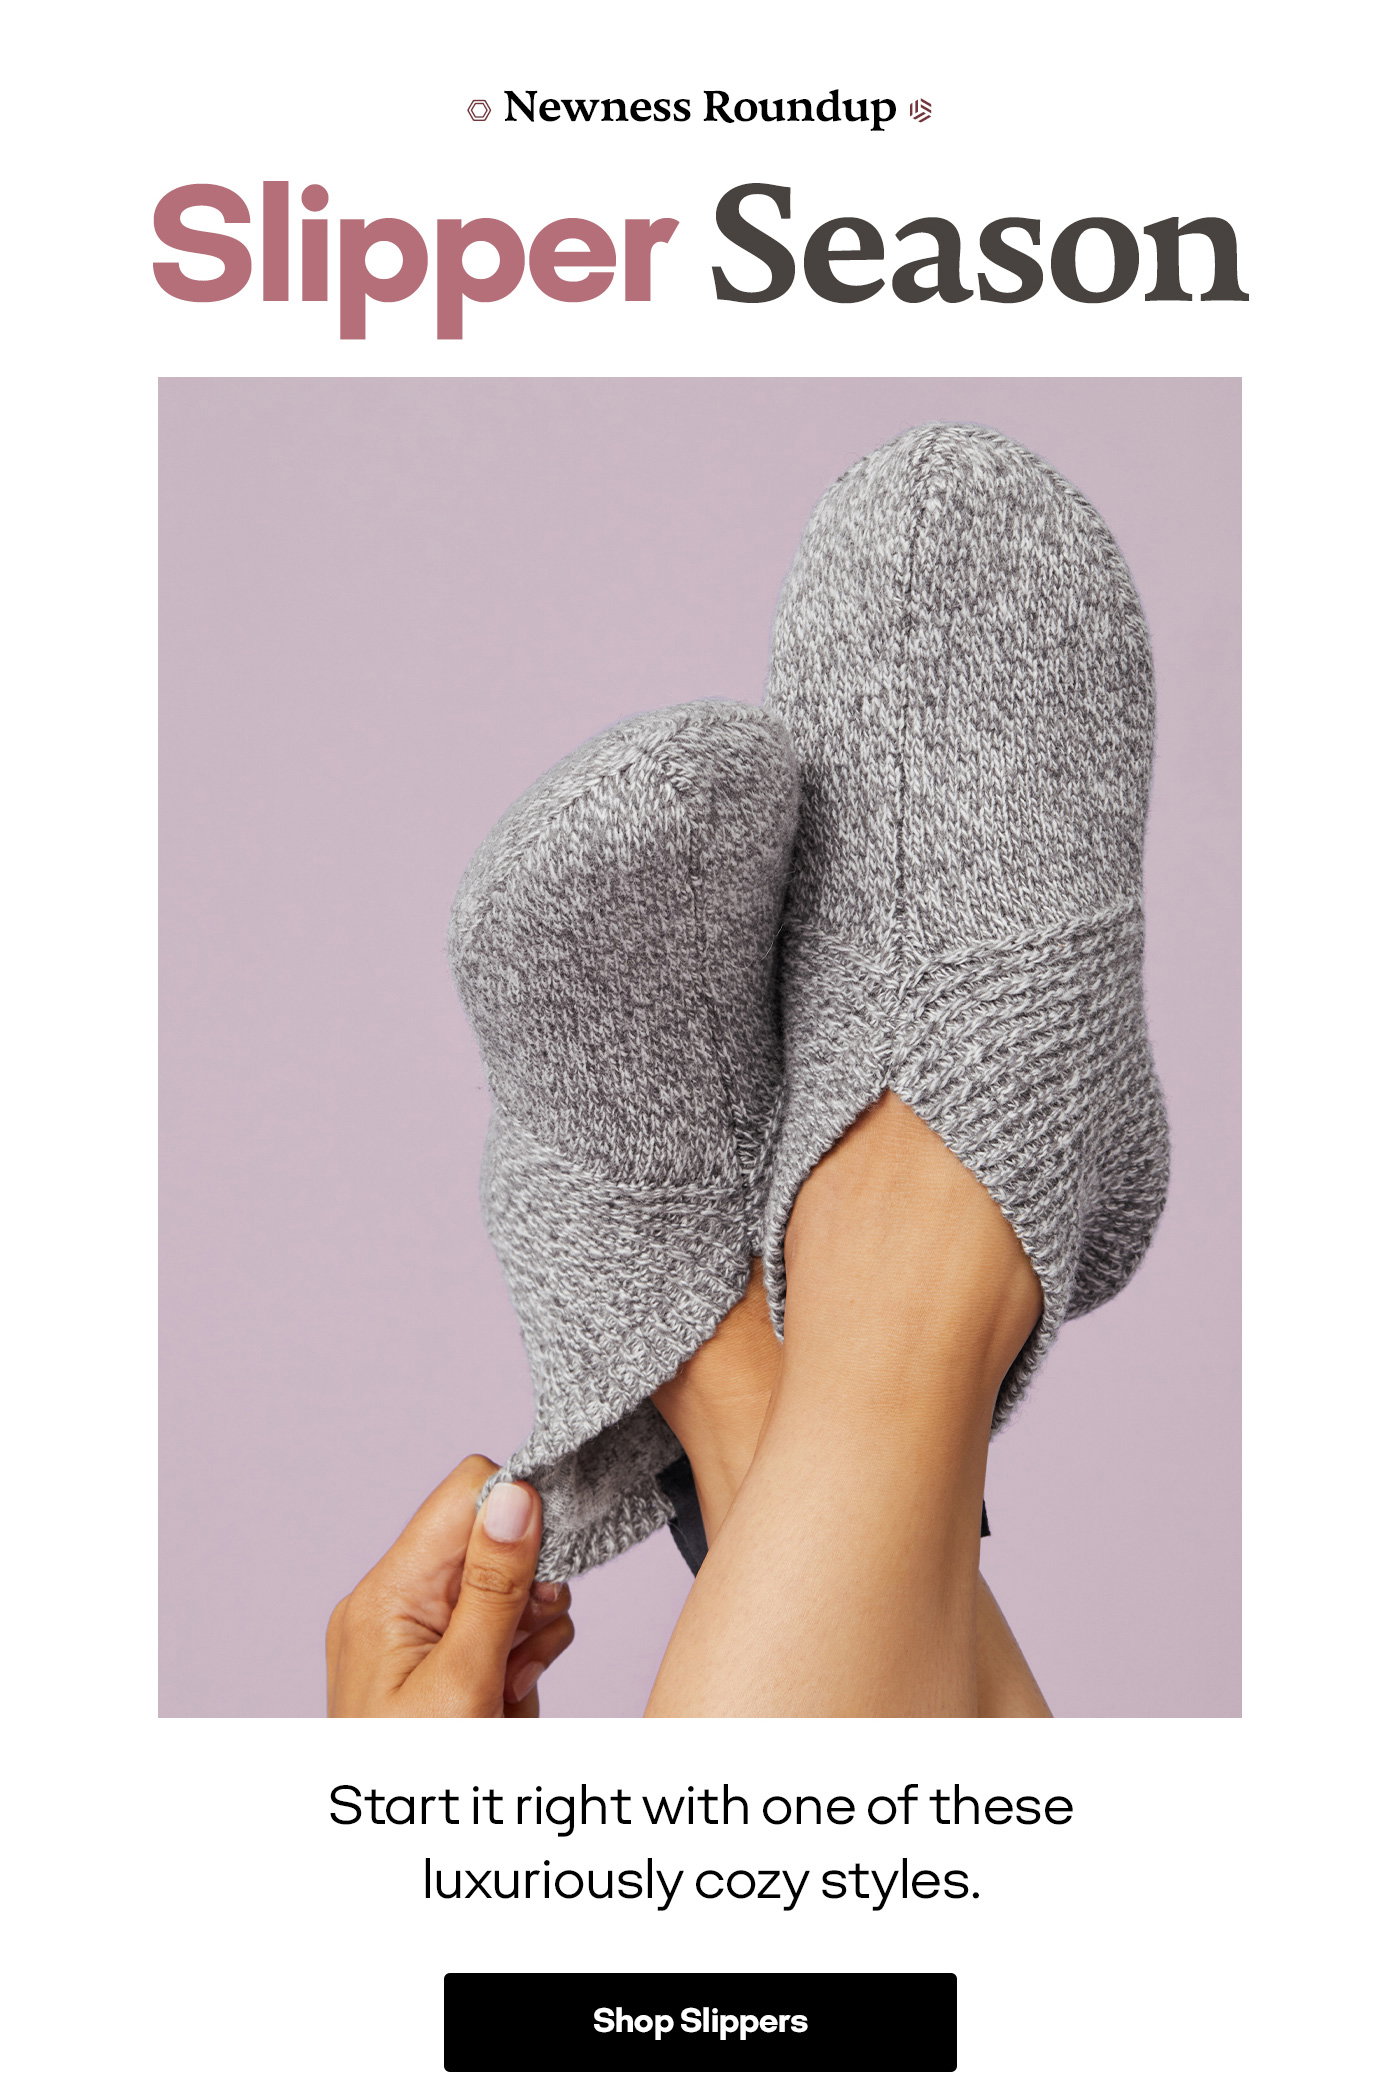 Bombas Gifts: Socks, Slippers, Merino Wool, Goody